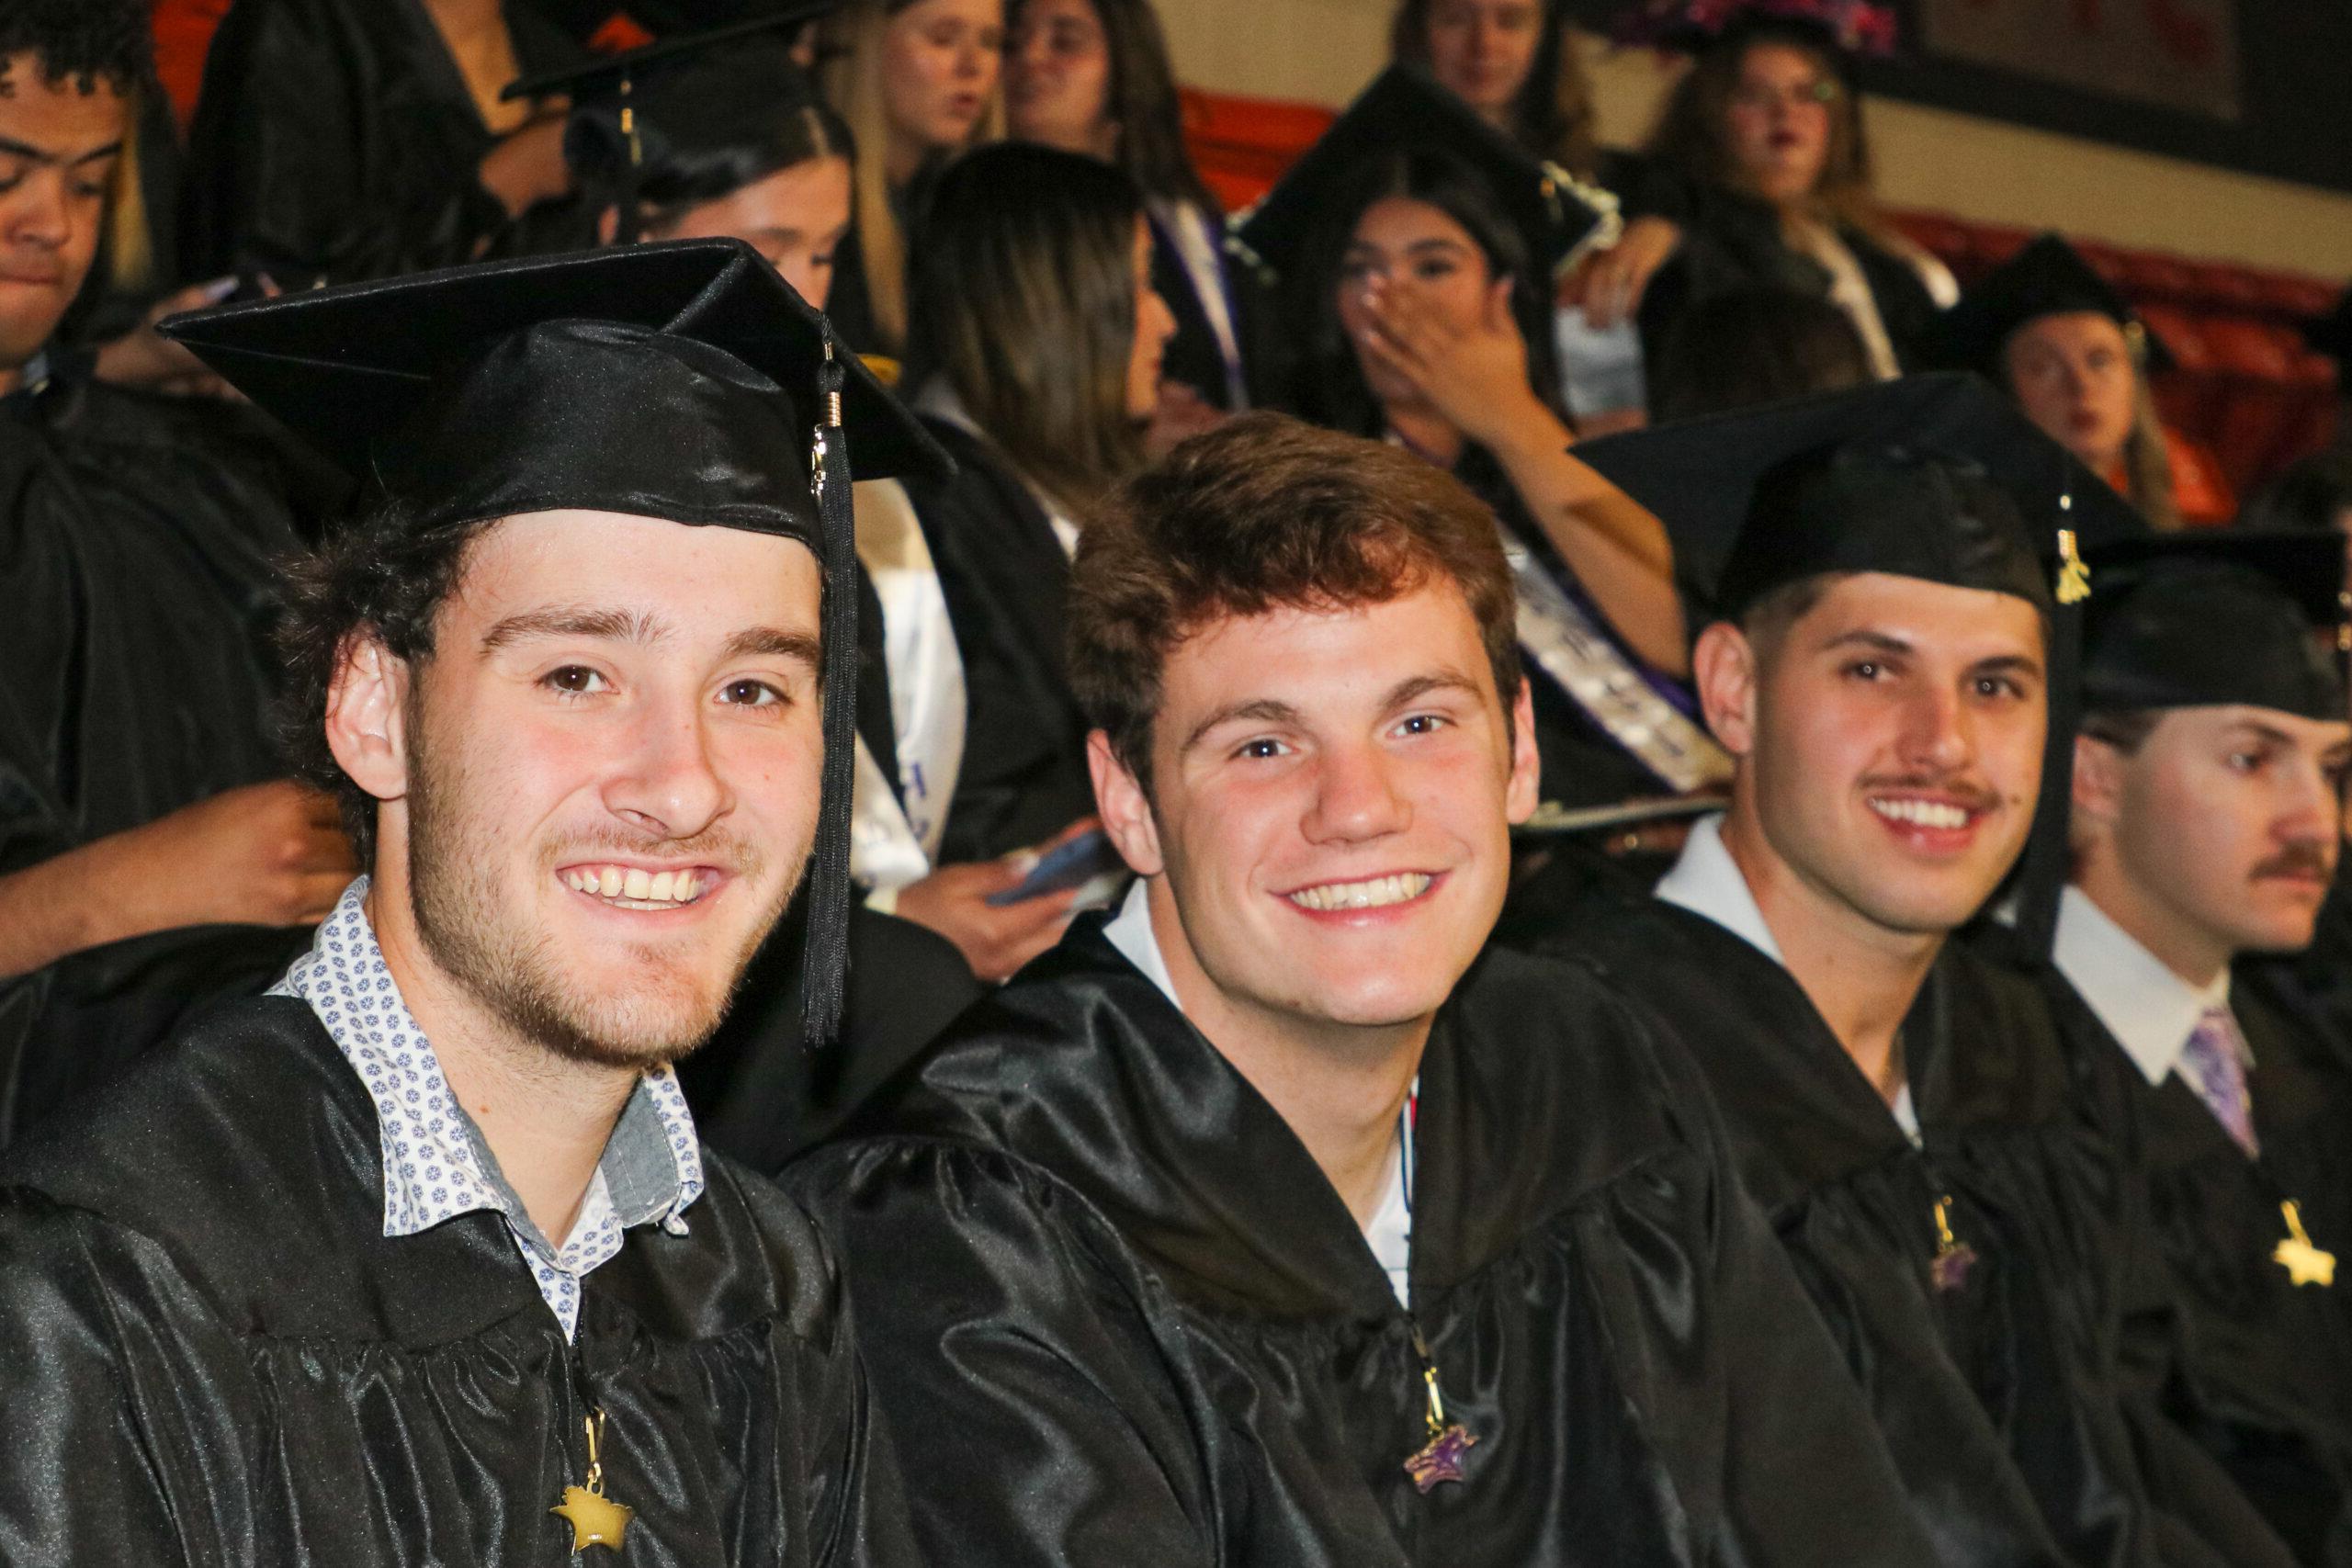 Group of men in graduation attire